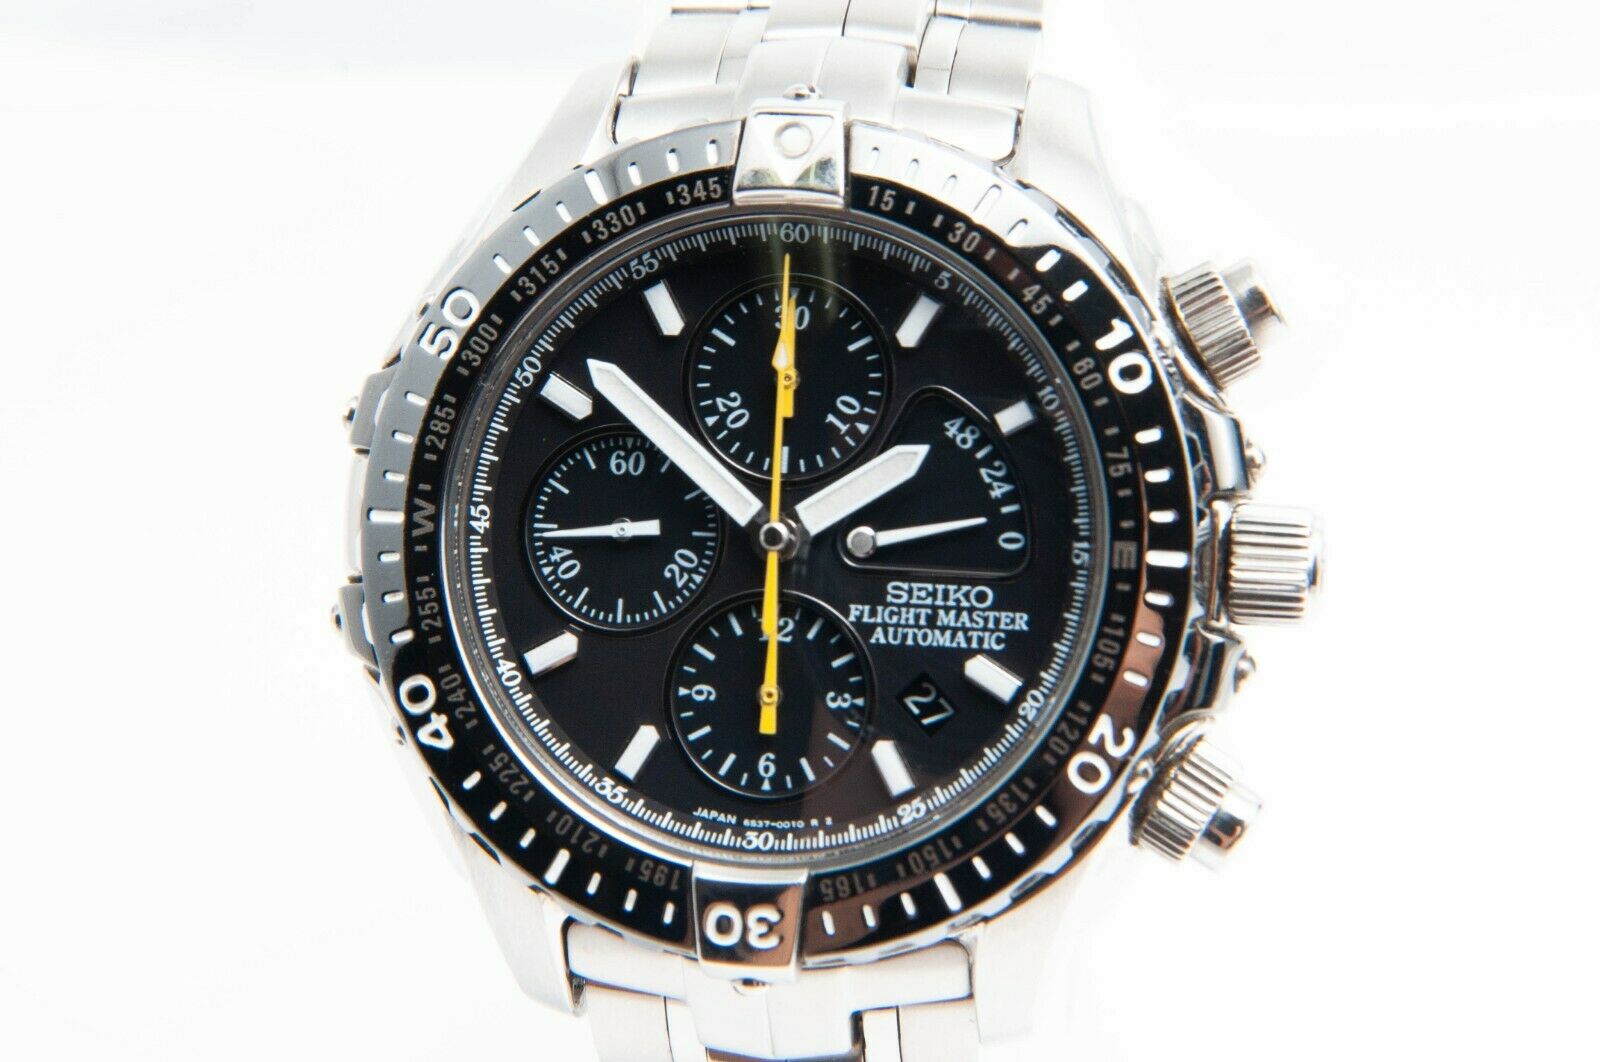 SEIKO SBDS001 FLIGHT MASTER 6S37-0010 Titanium Automatic Wristwatch #3463 |  WatchCharts